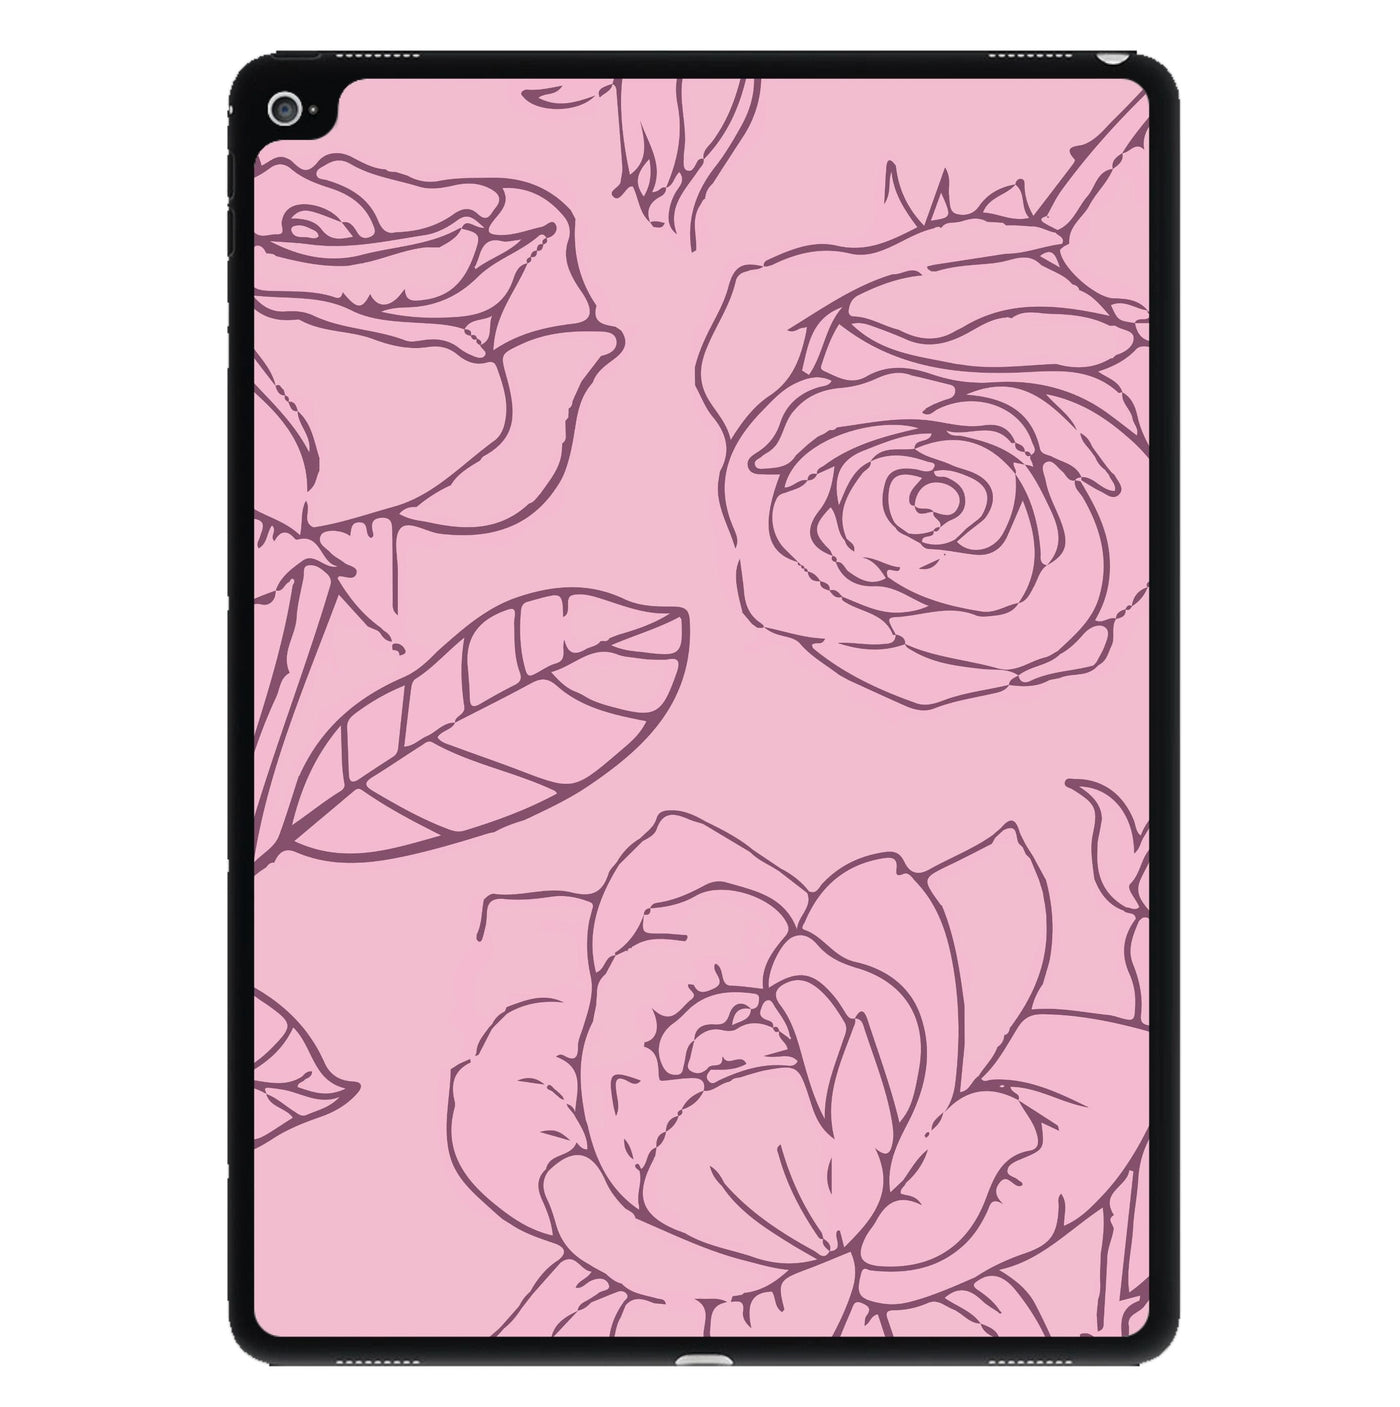 Roses - Foliage iPad Case